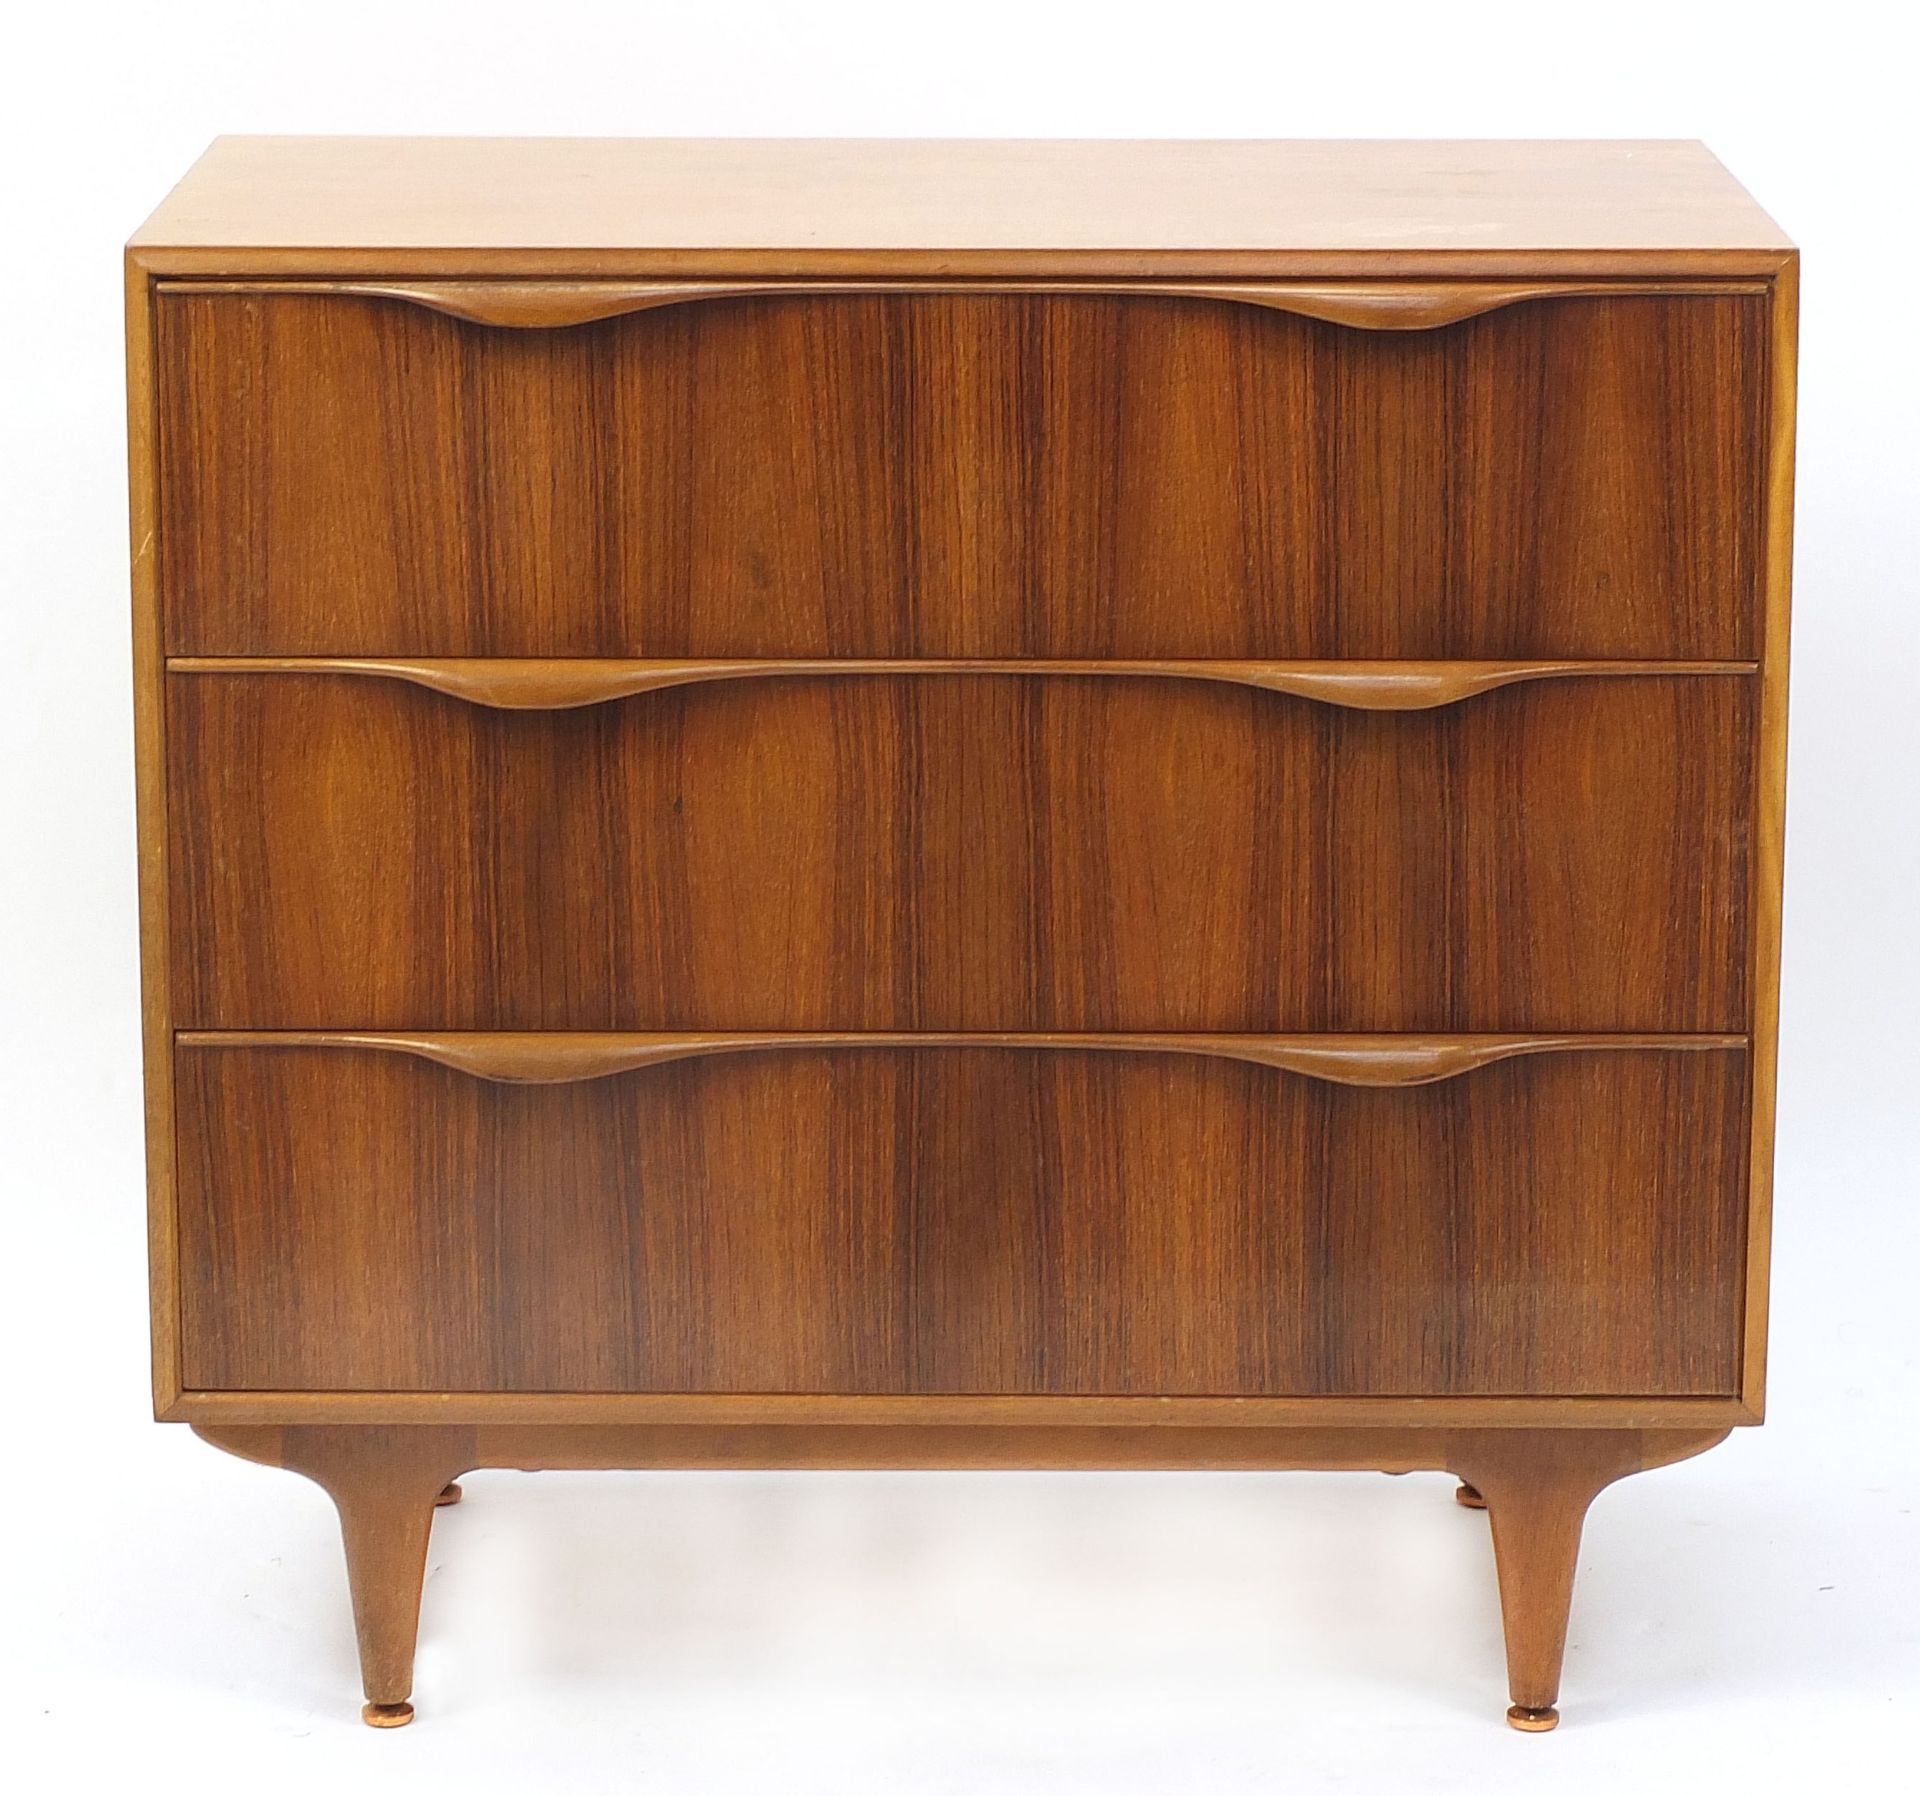 Gordon Russell, teak three drawer chest, 79cm H x 84cm W x 46cm D - Image 2 of 4